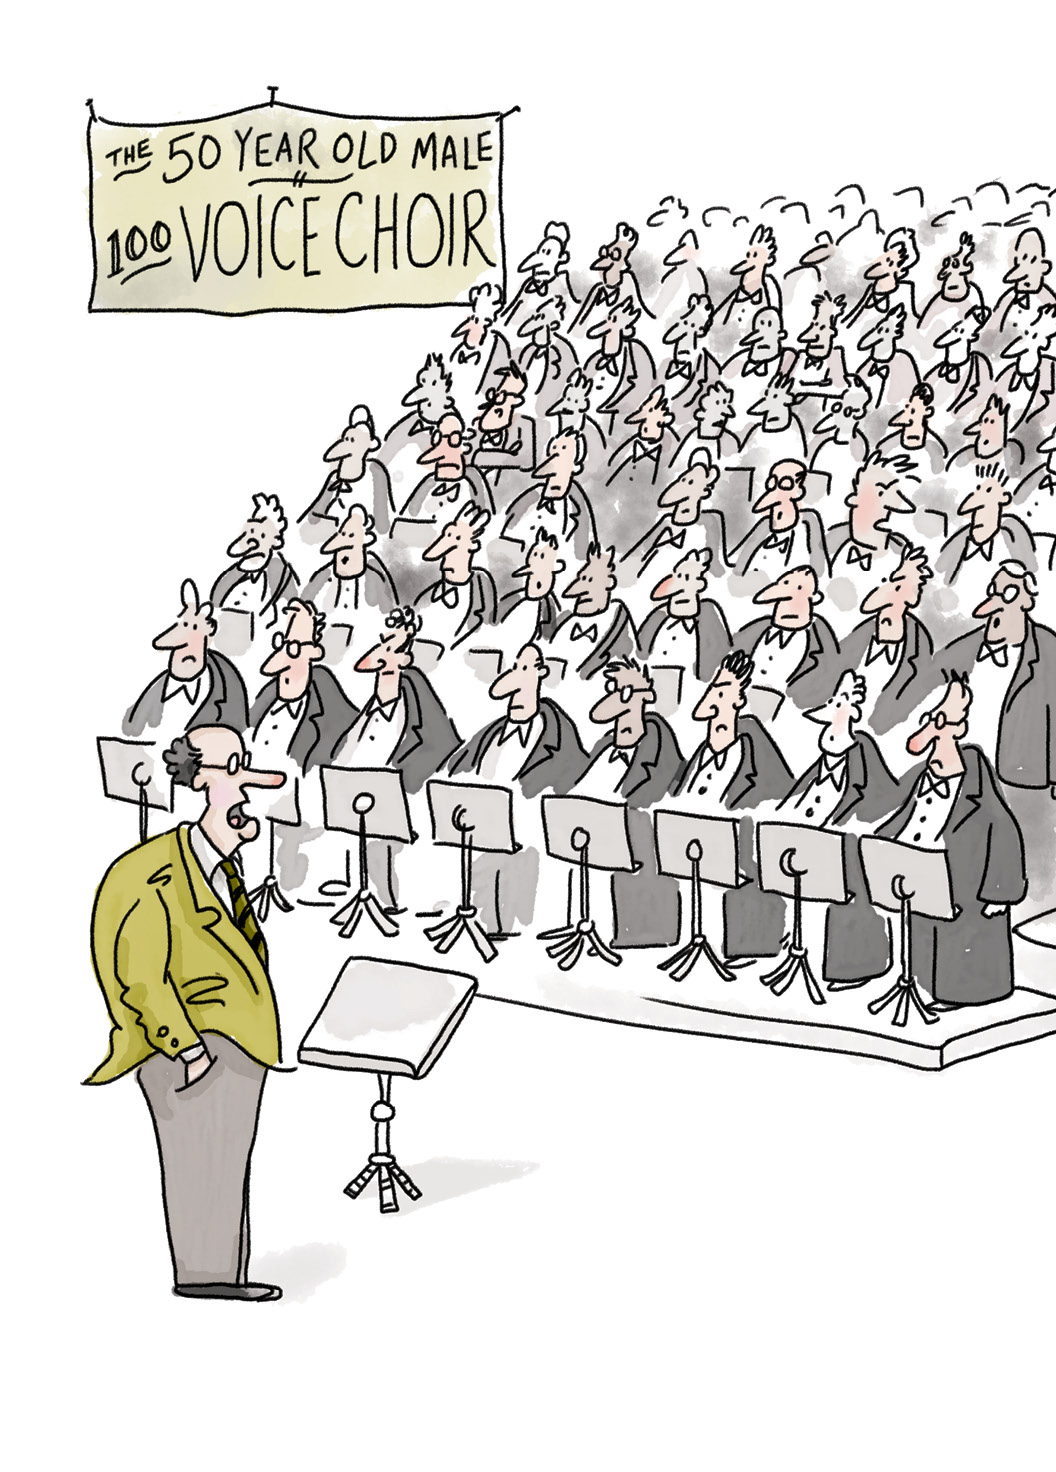 Warrick Bishop - Male choir illustration